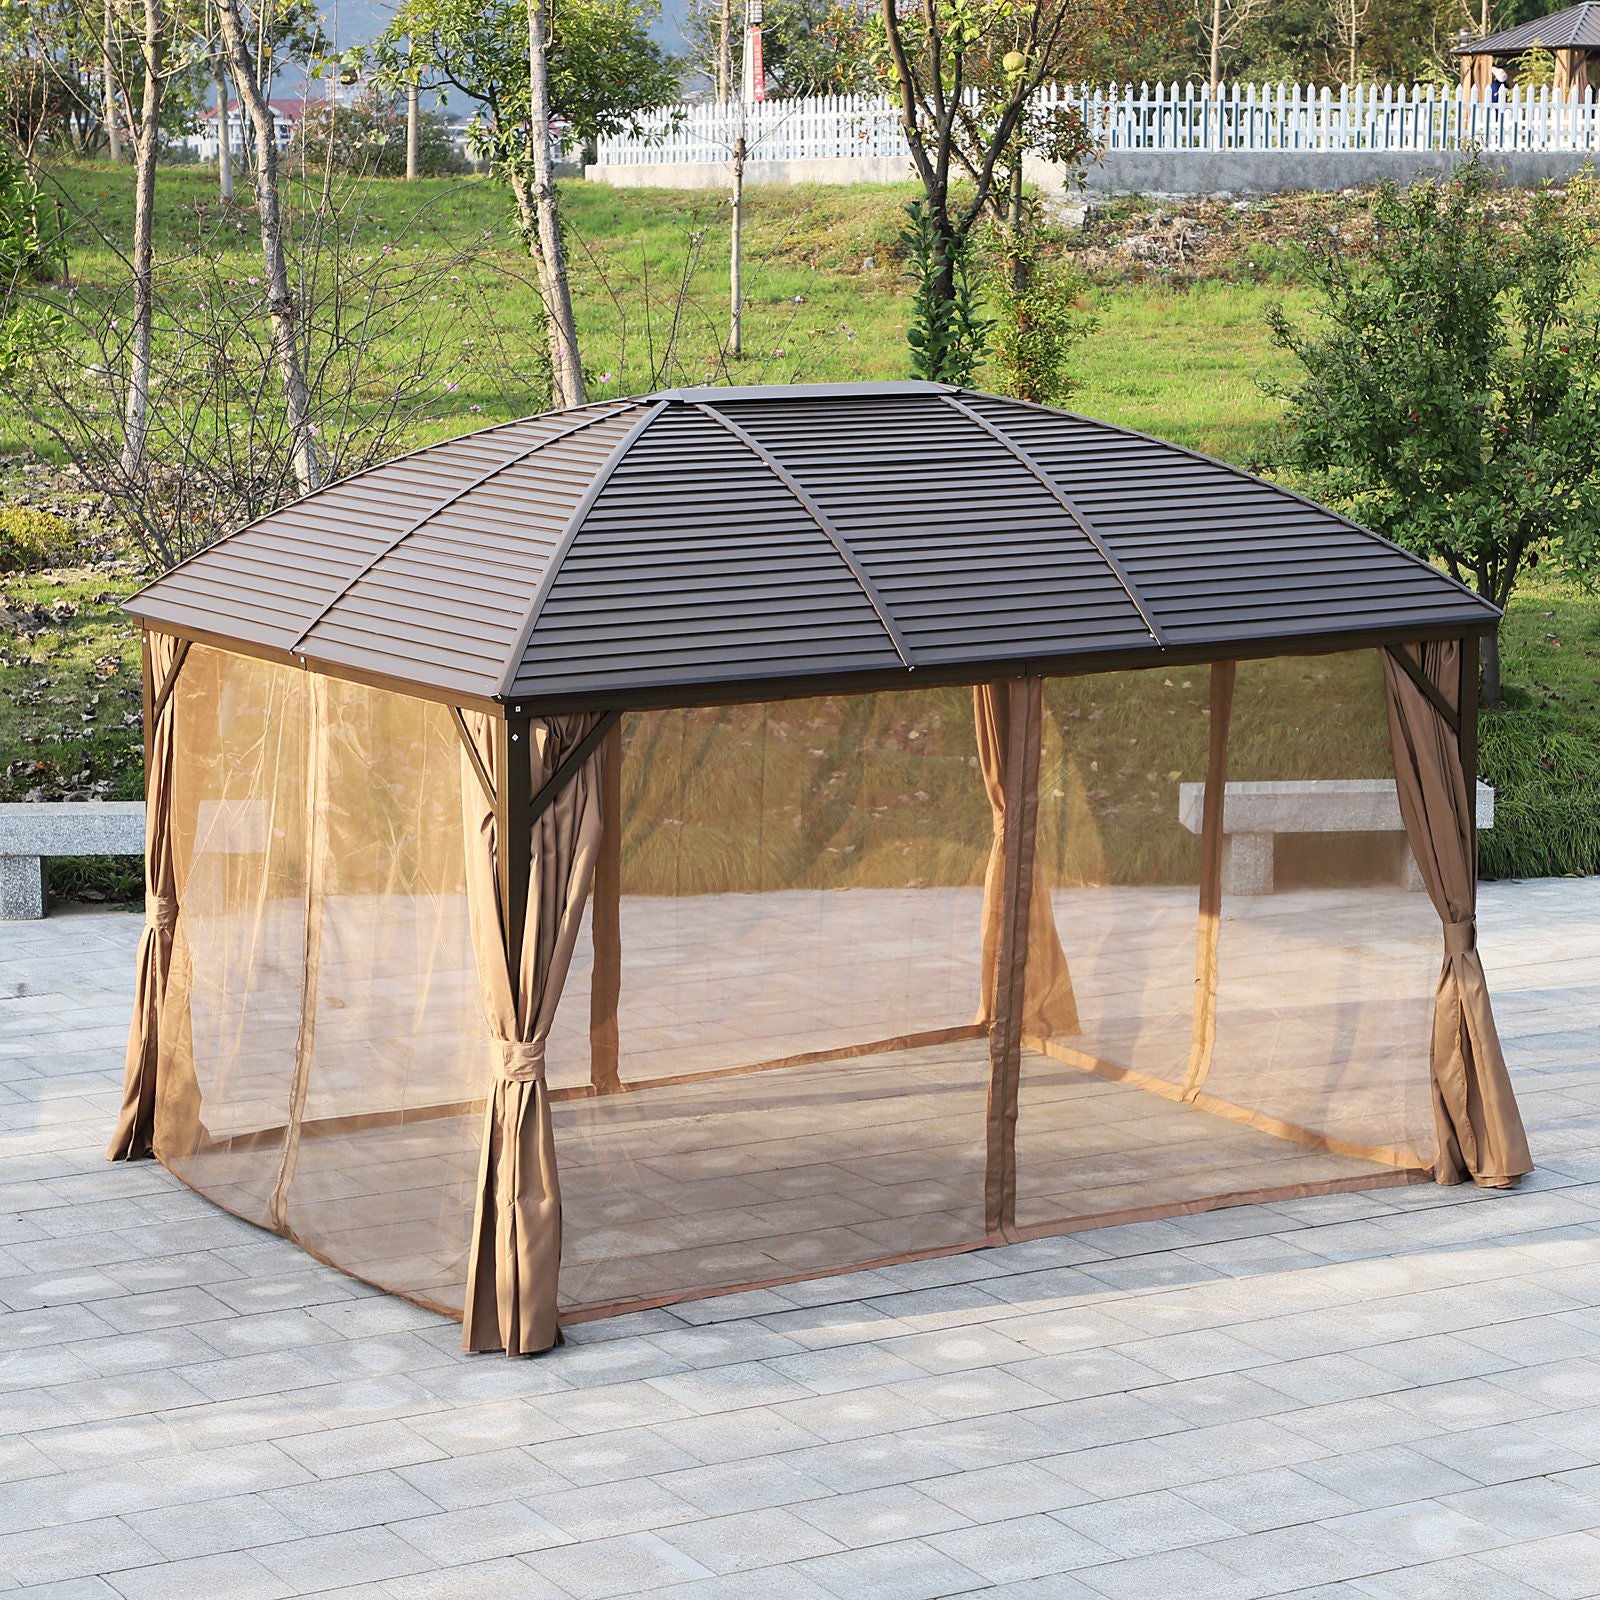 Nancy's J Young Garden Pavilion Party Tent - Brons, Bruin - Aluminium, Staal, Polyester - 156,69 cm x 117,32 cm x 110,24 cm